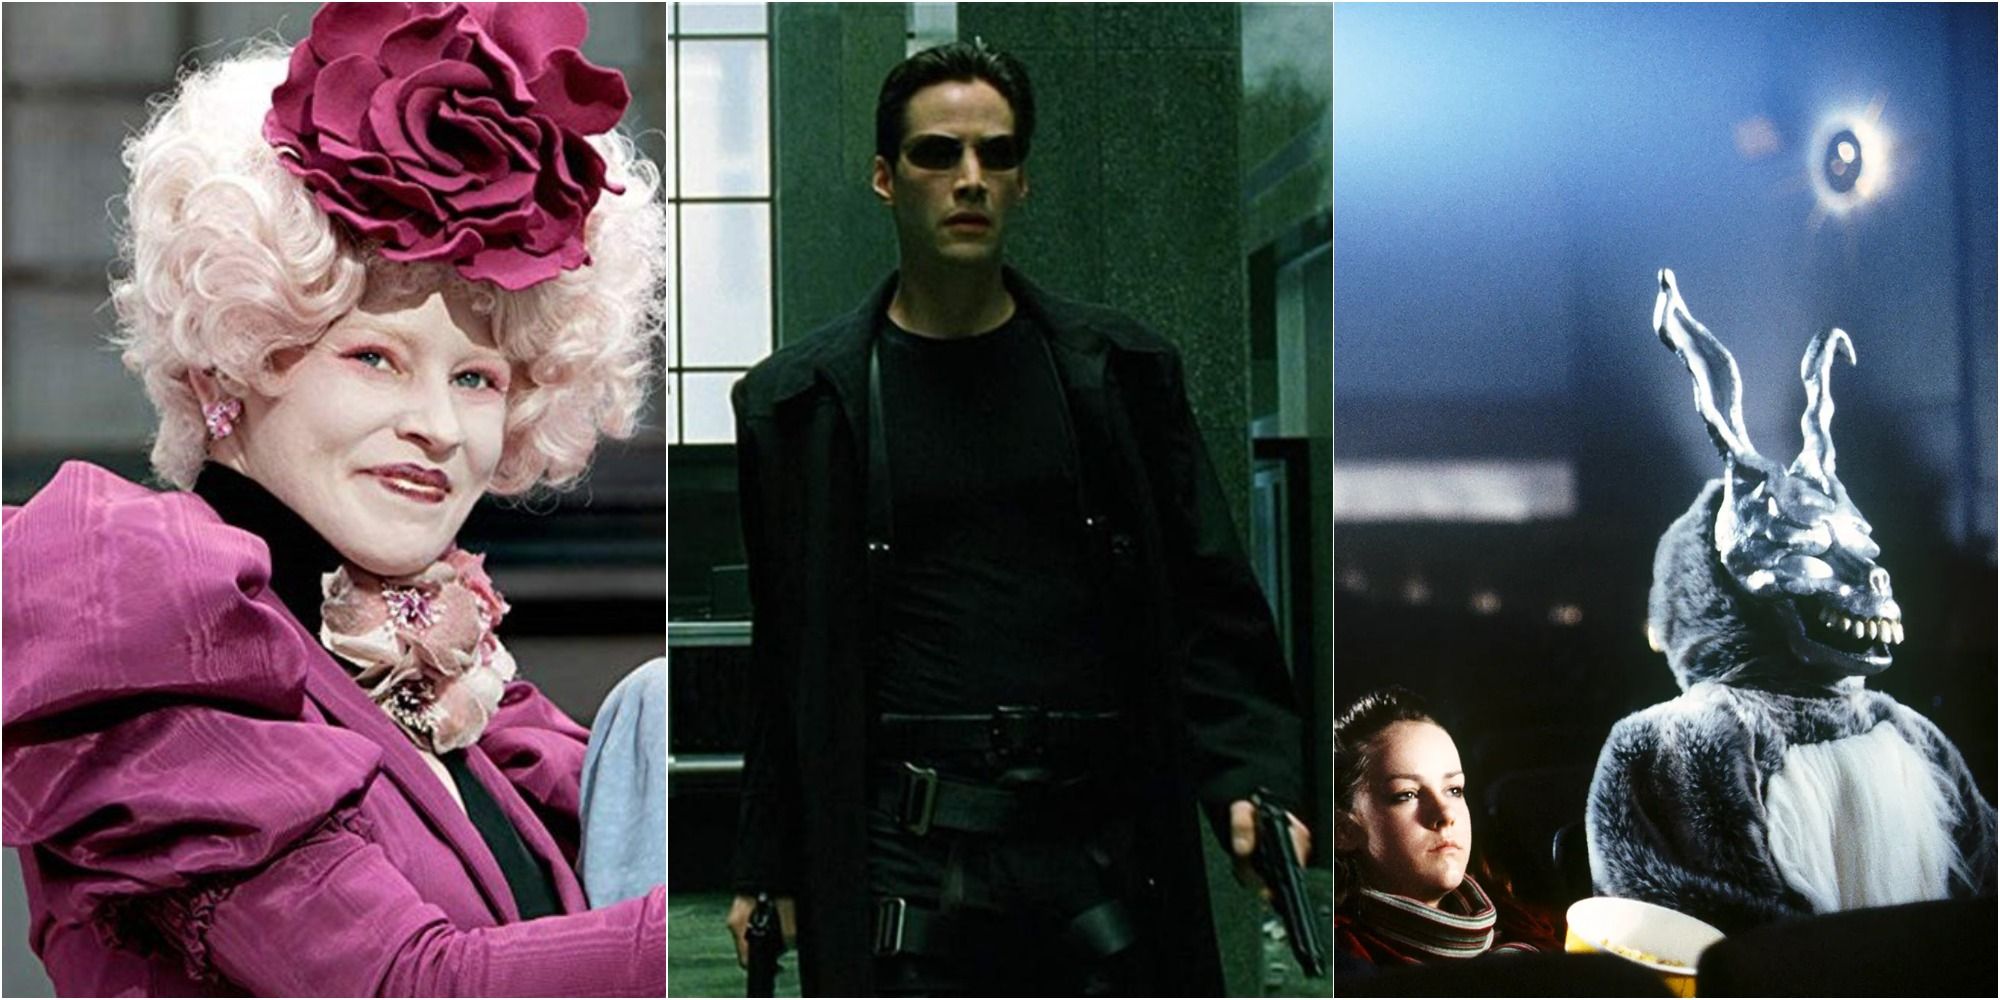 Split image of Donnie Darko rabbit, Neo from the Matrix, Effie from Hunger Games